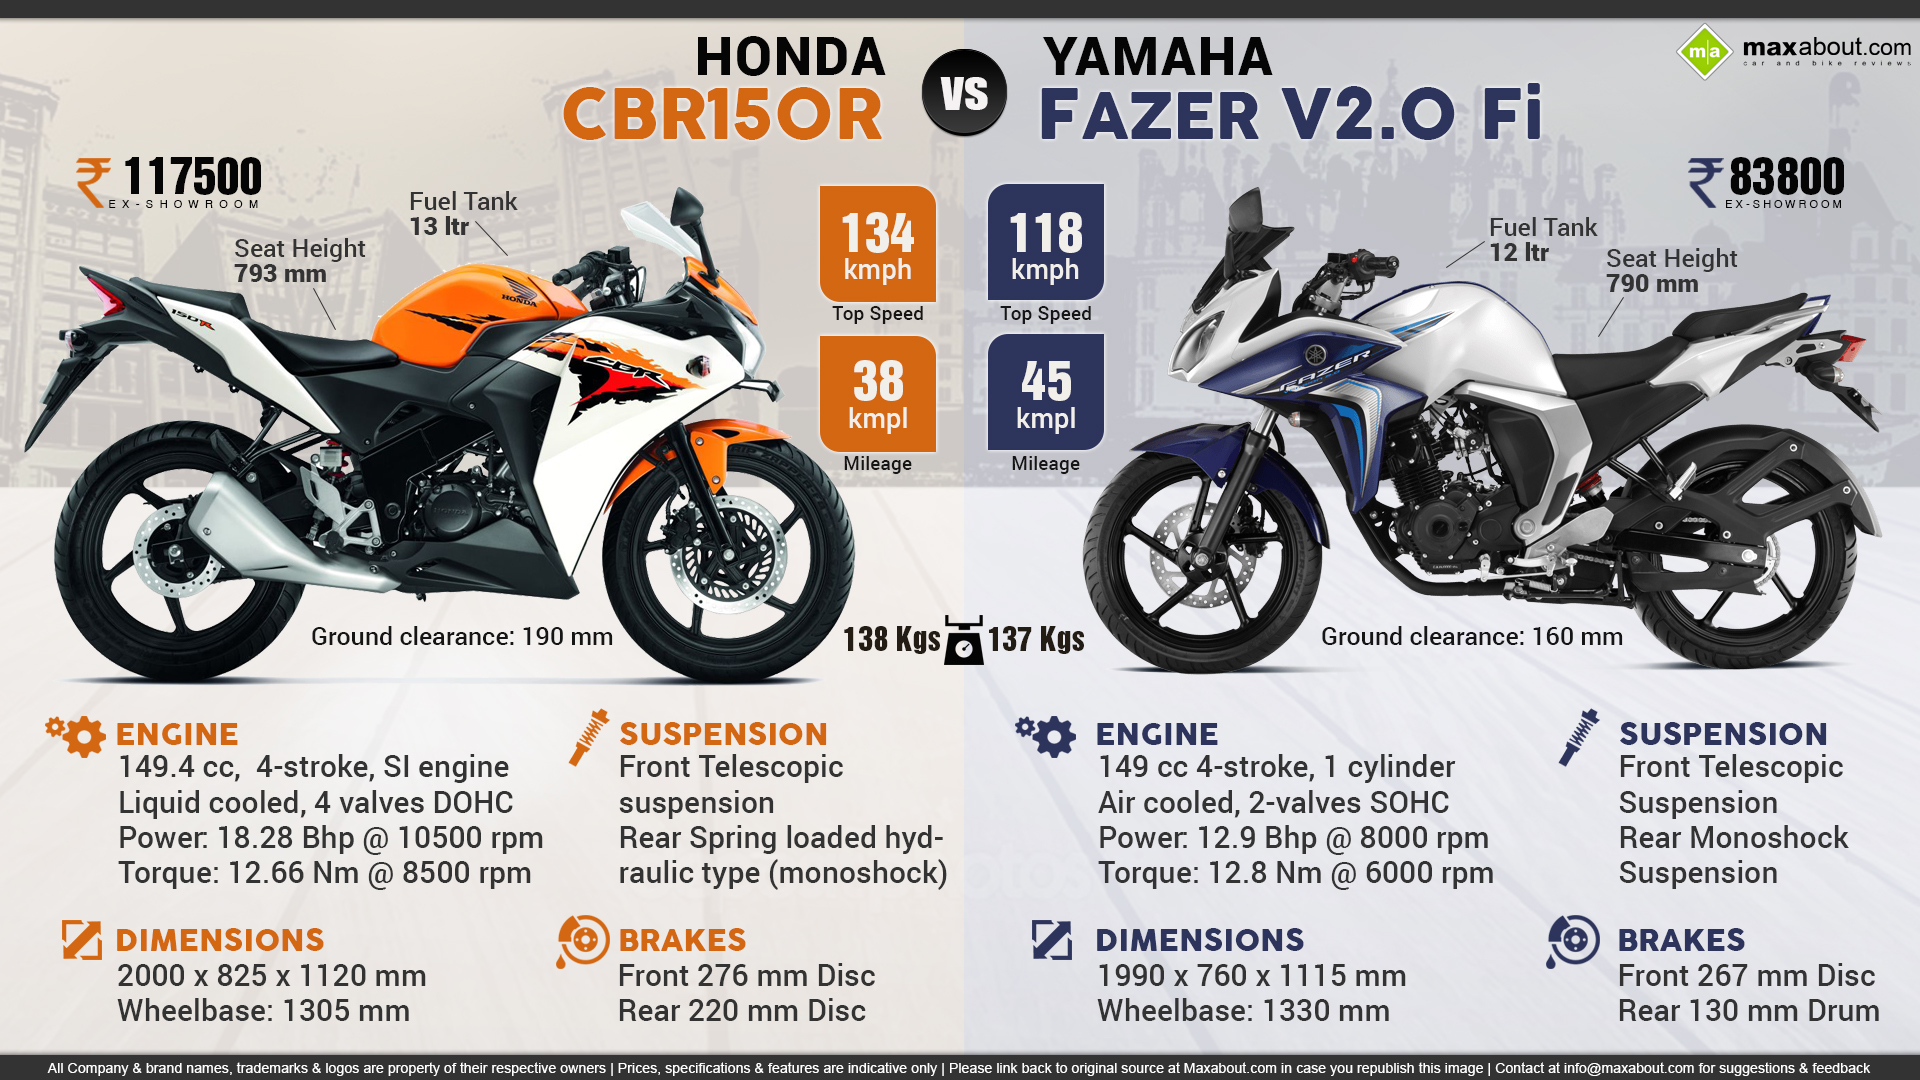 Honda CBR150R Vs Yamaha Fazer V2 Fi